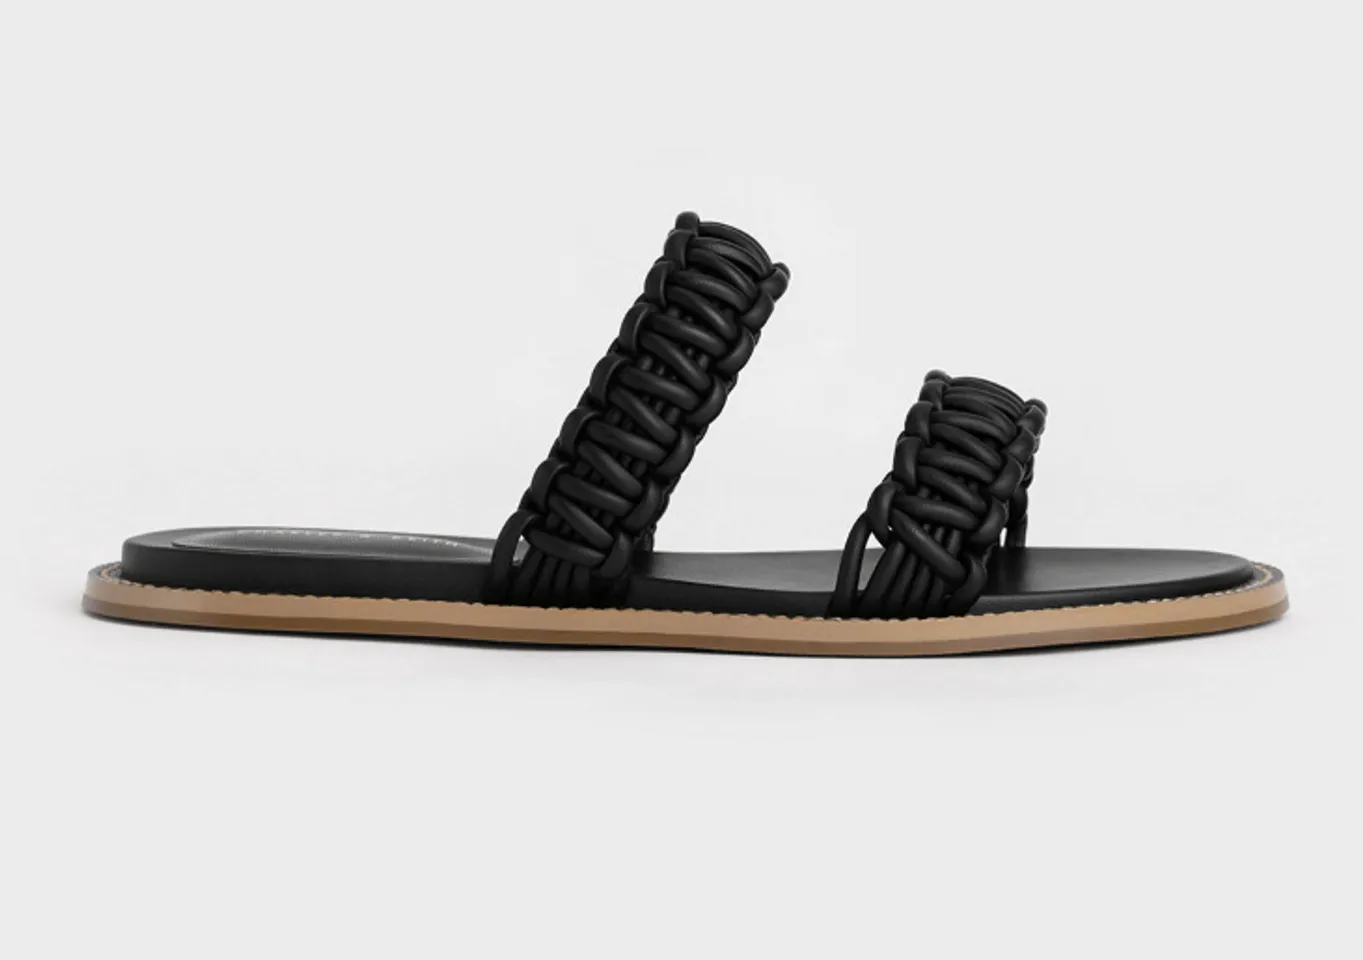 Dép sandals nữ Charles & Keith Braided Strap Slide Black CK1-70380949 màu đen, 35